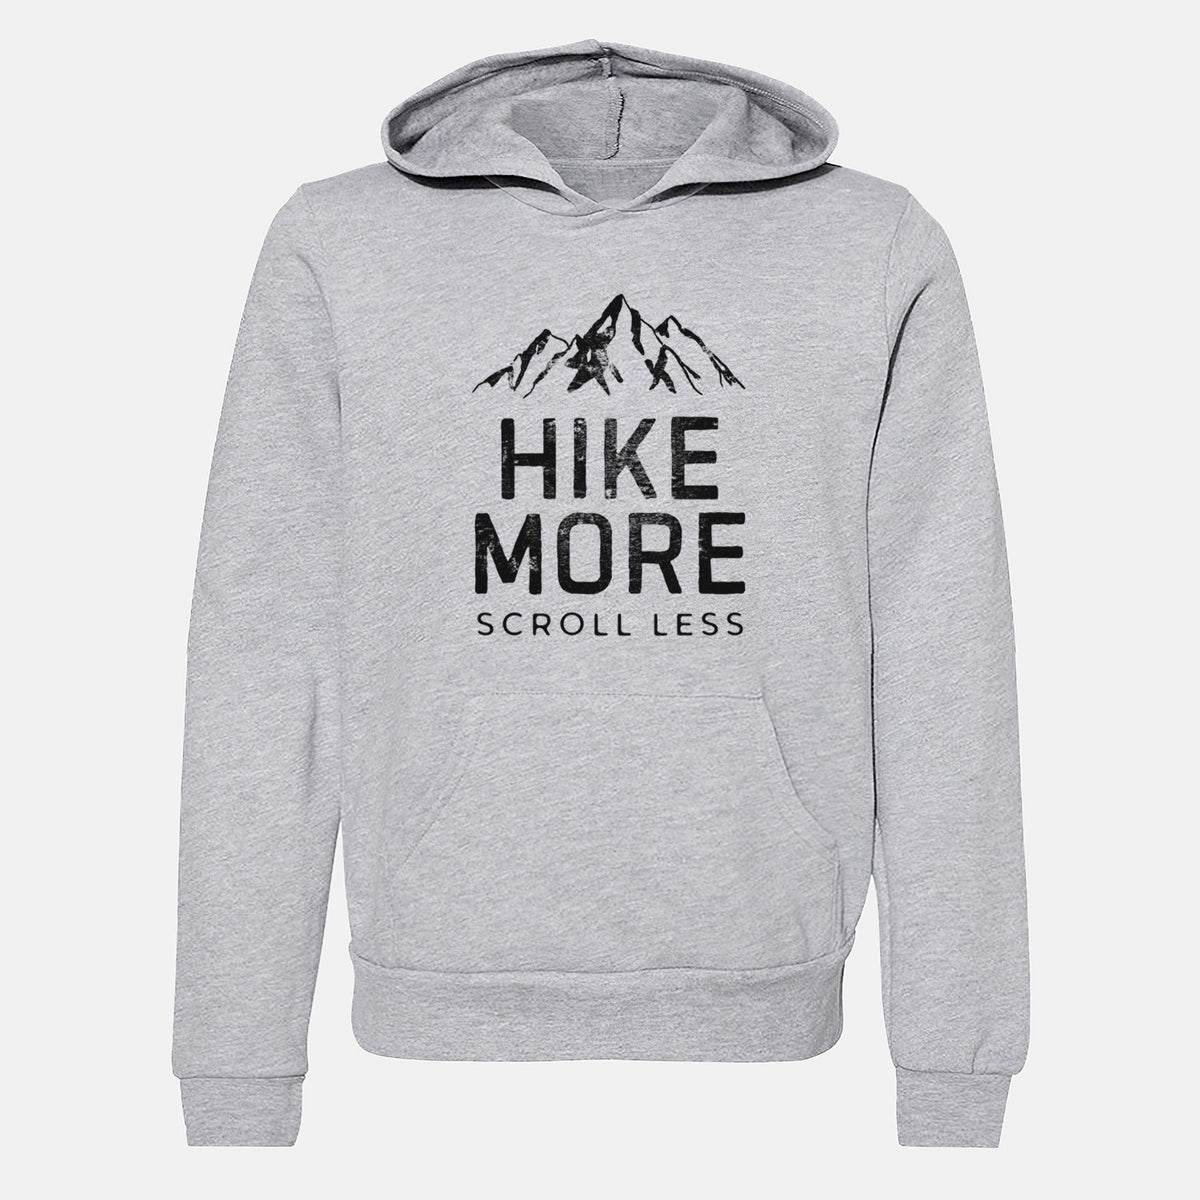 Hike More - Scroll Less - Youth Hoodie Sweatshirt